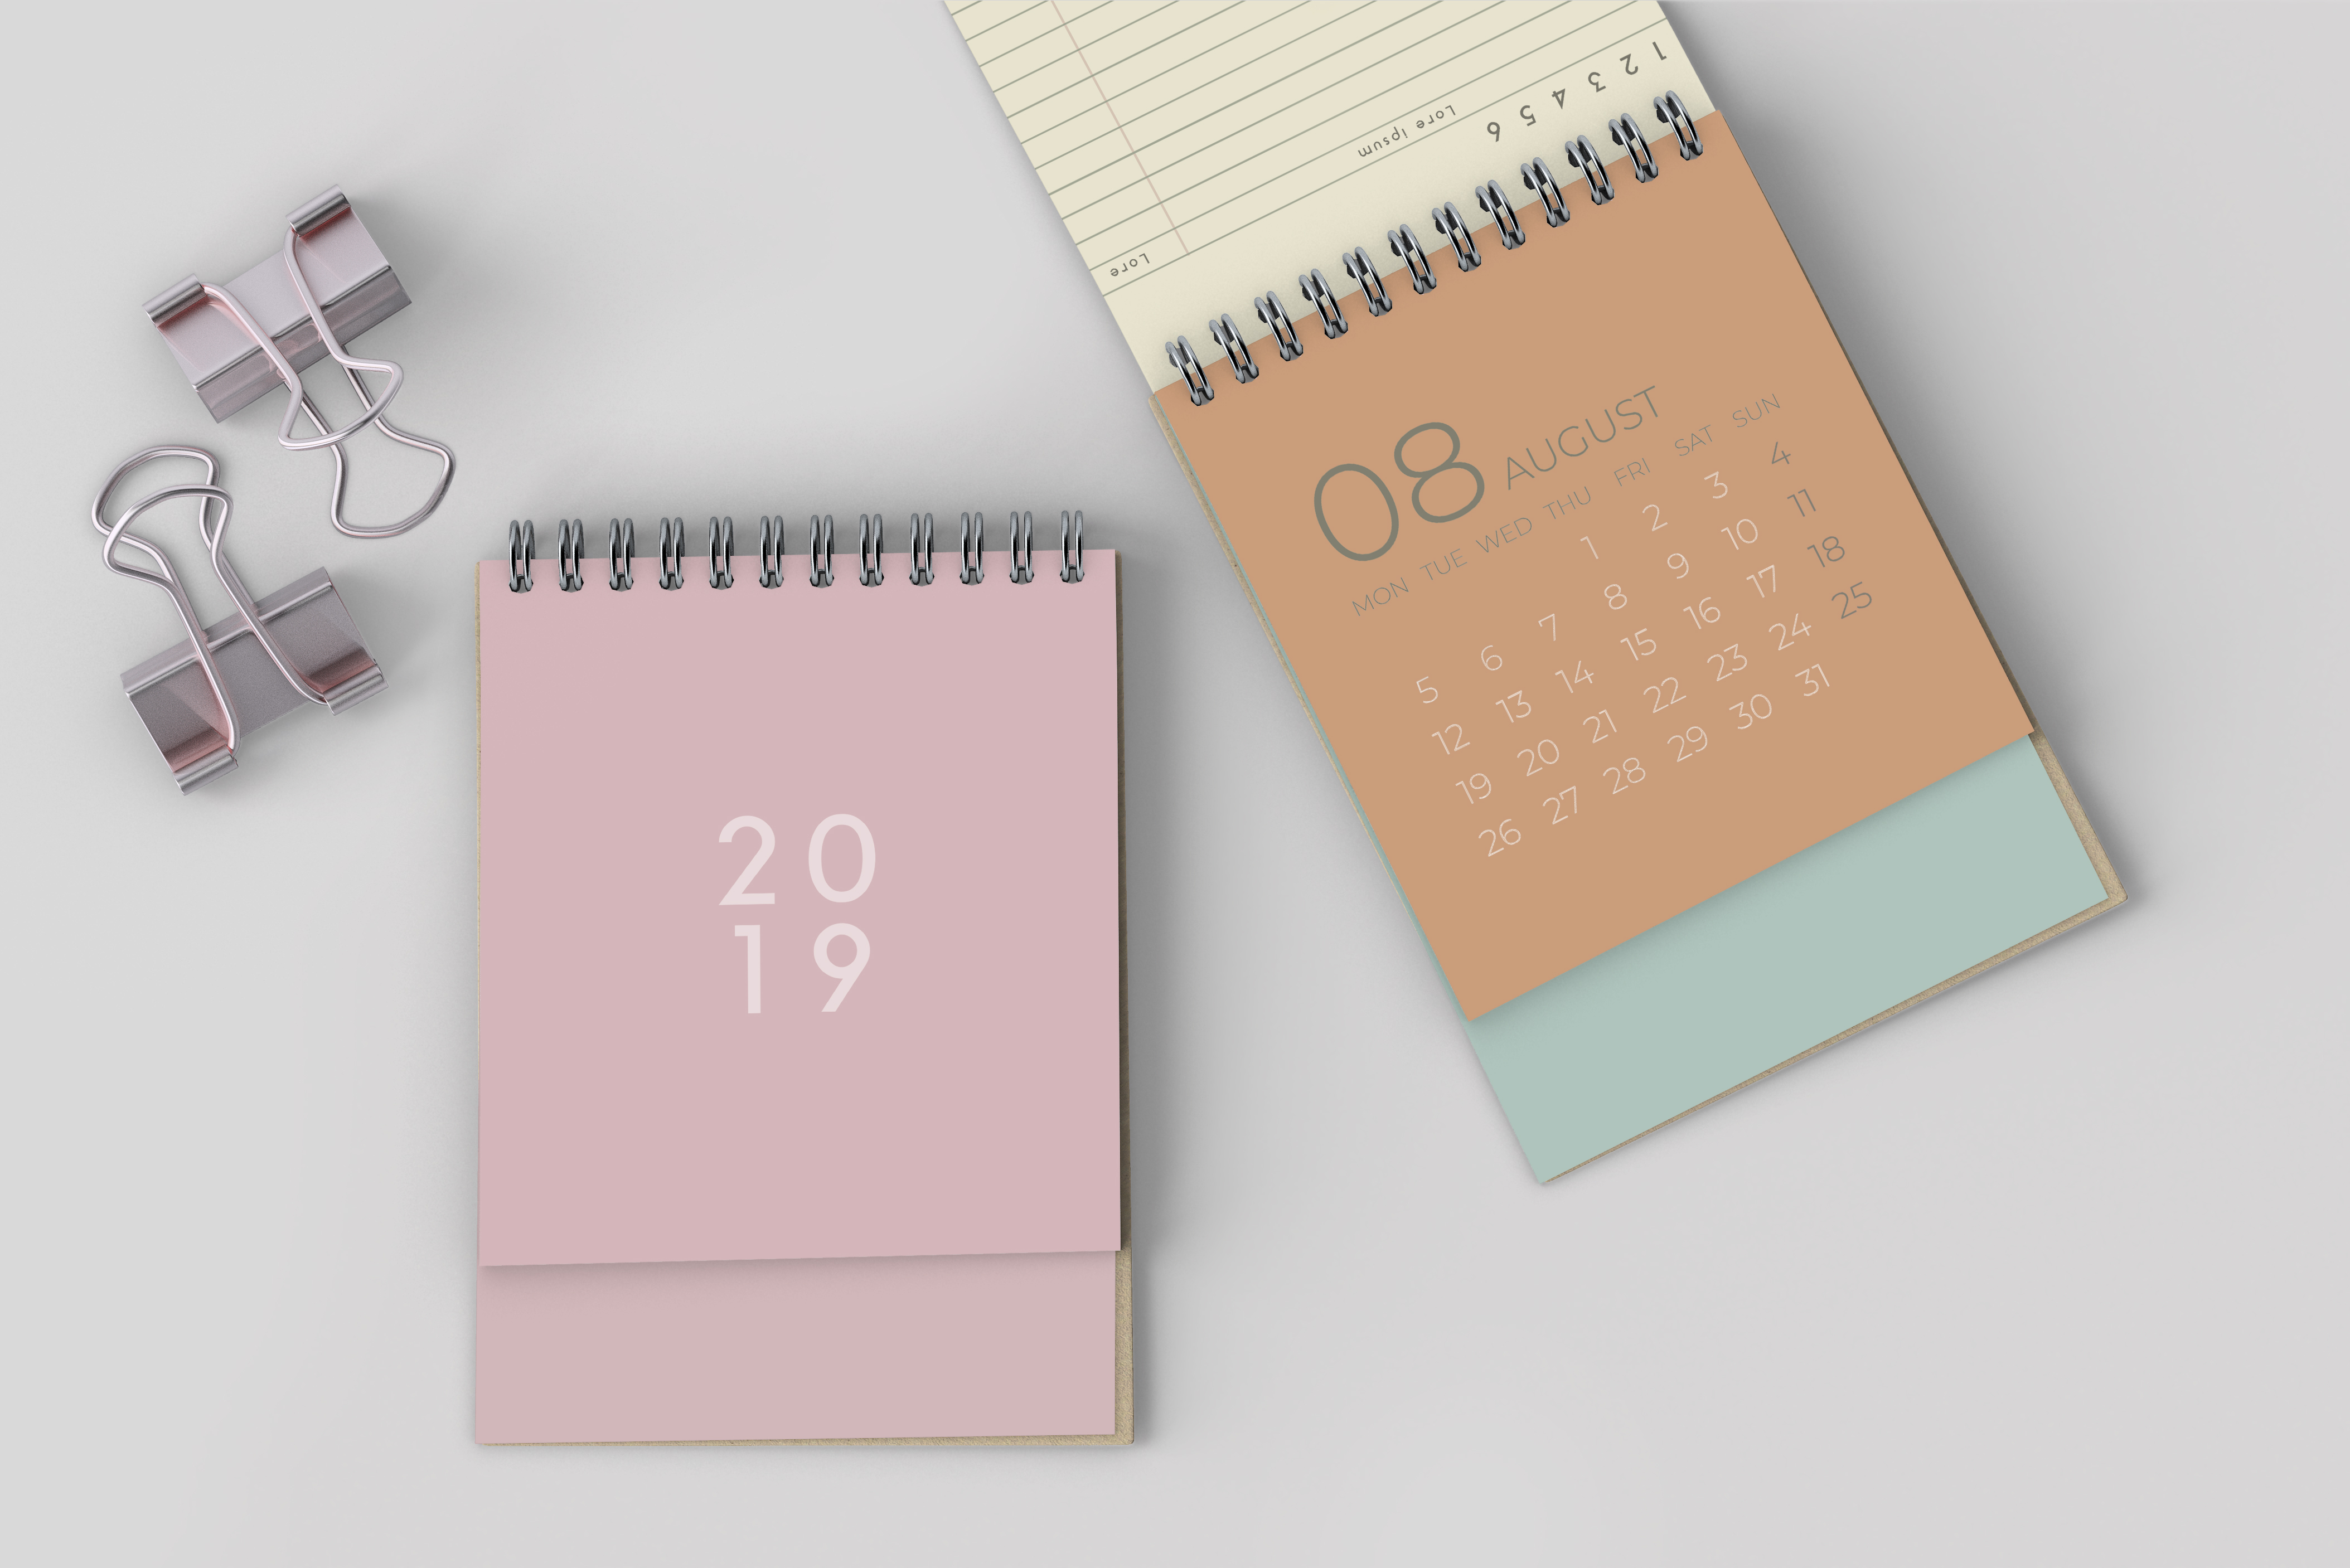 Tahun Baru Segera Tiba, Segera Pesan Jasa Desain Kalender 20204215 x 2813